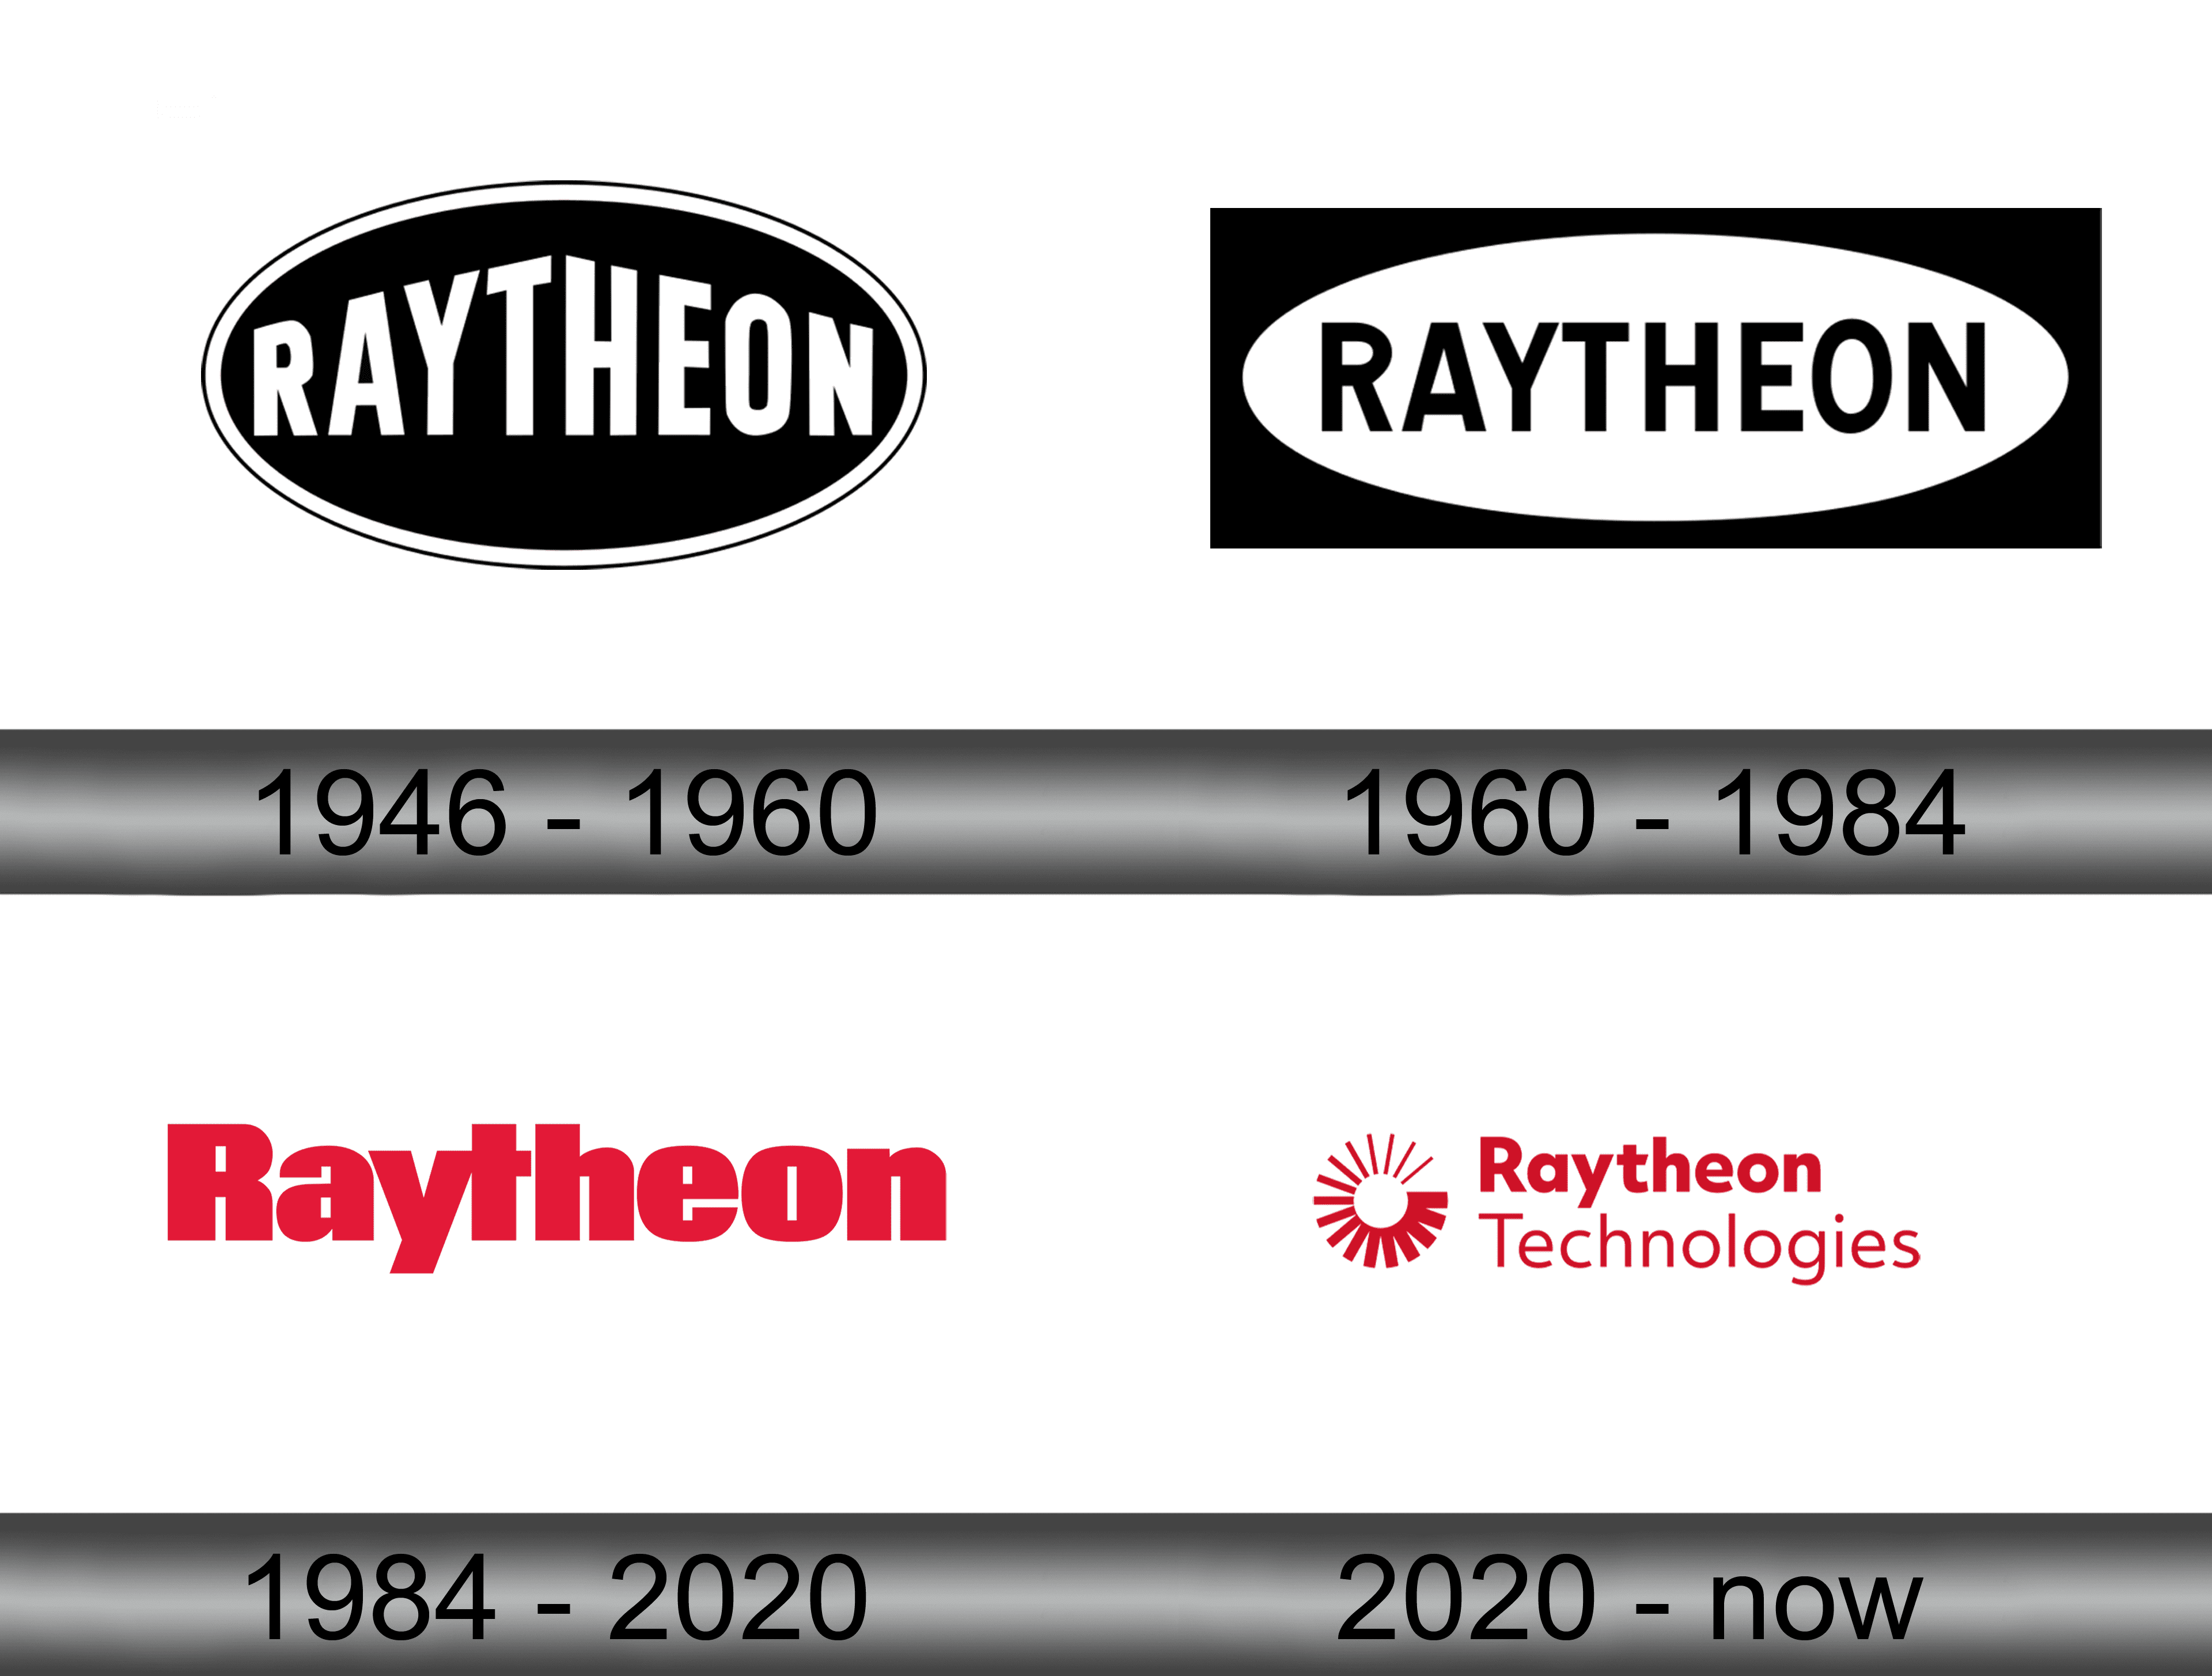 raytheon logo png